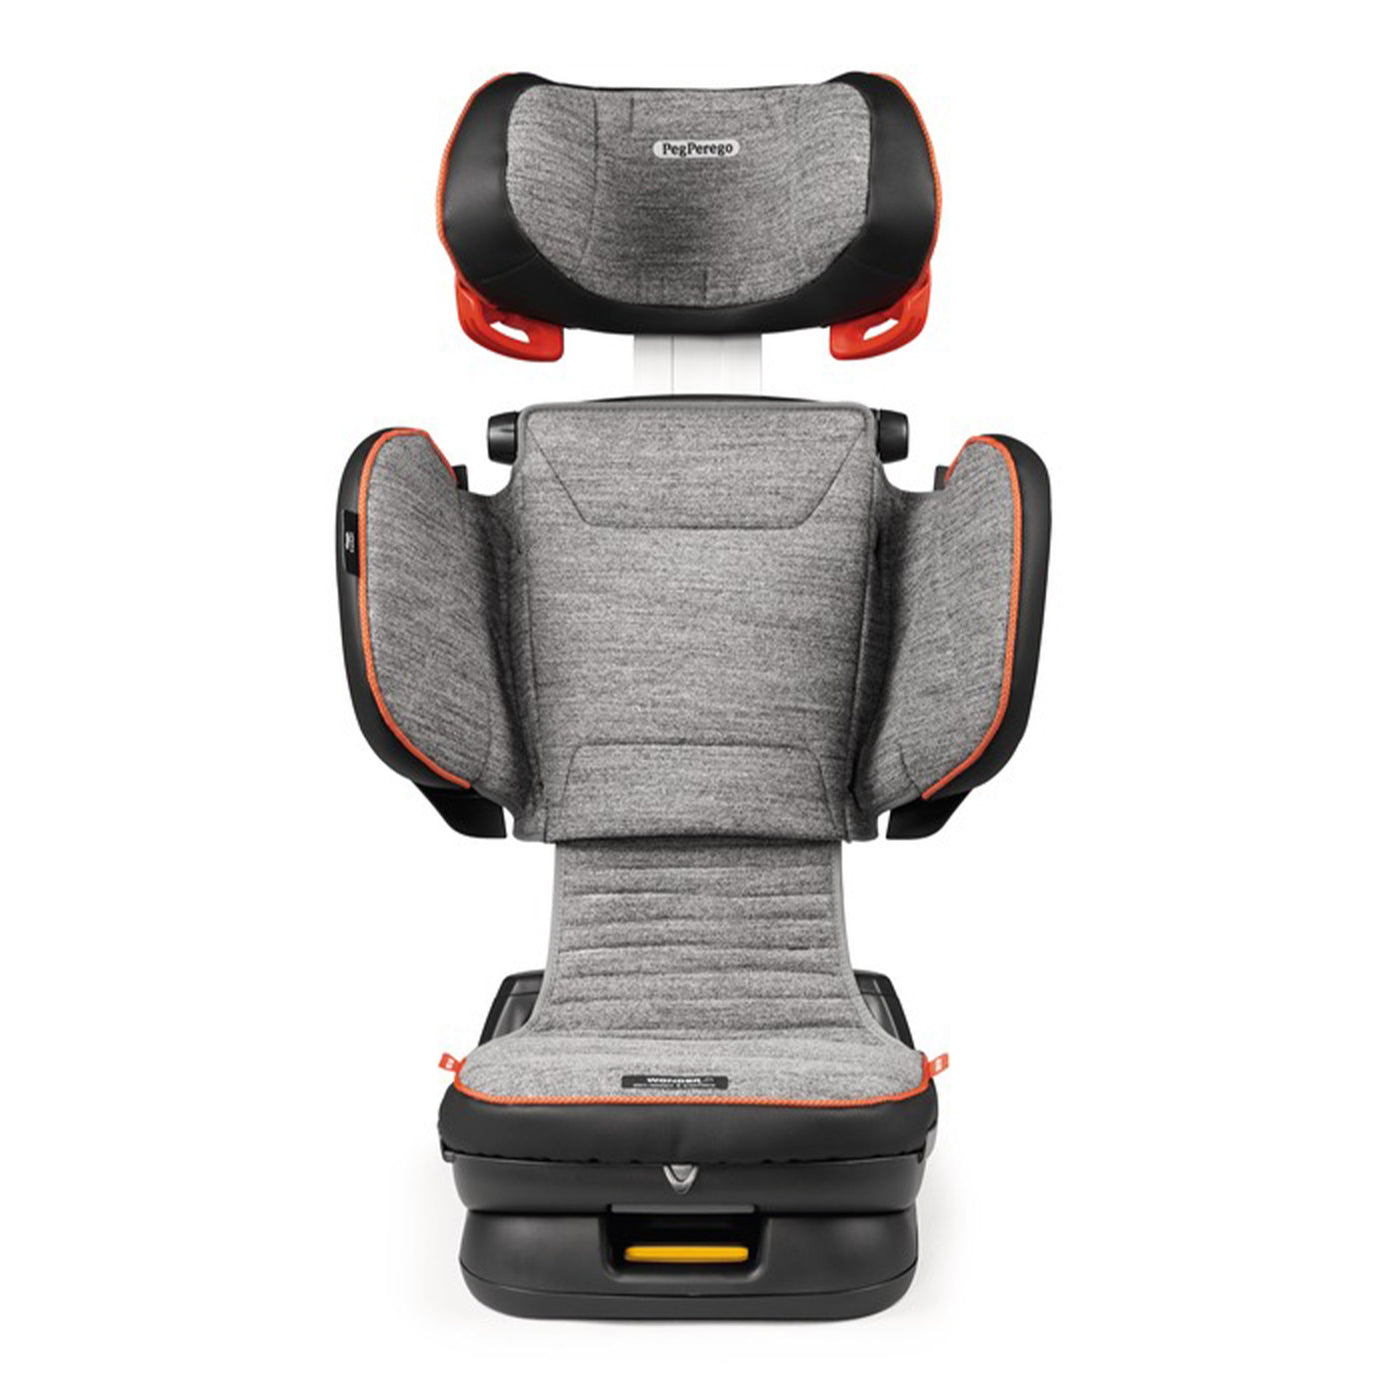 PegPerego Viaggio Flex 120 Booster Seat